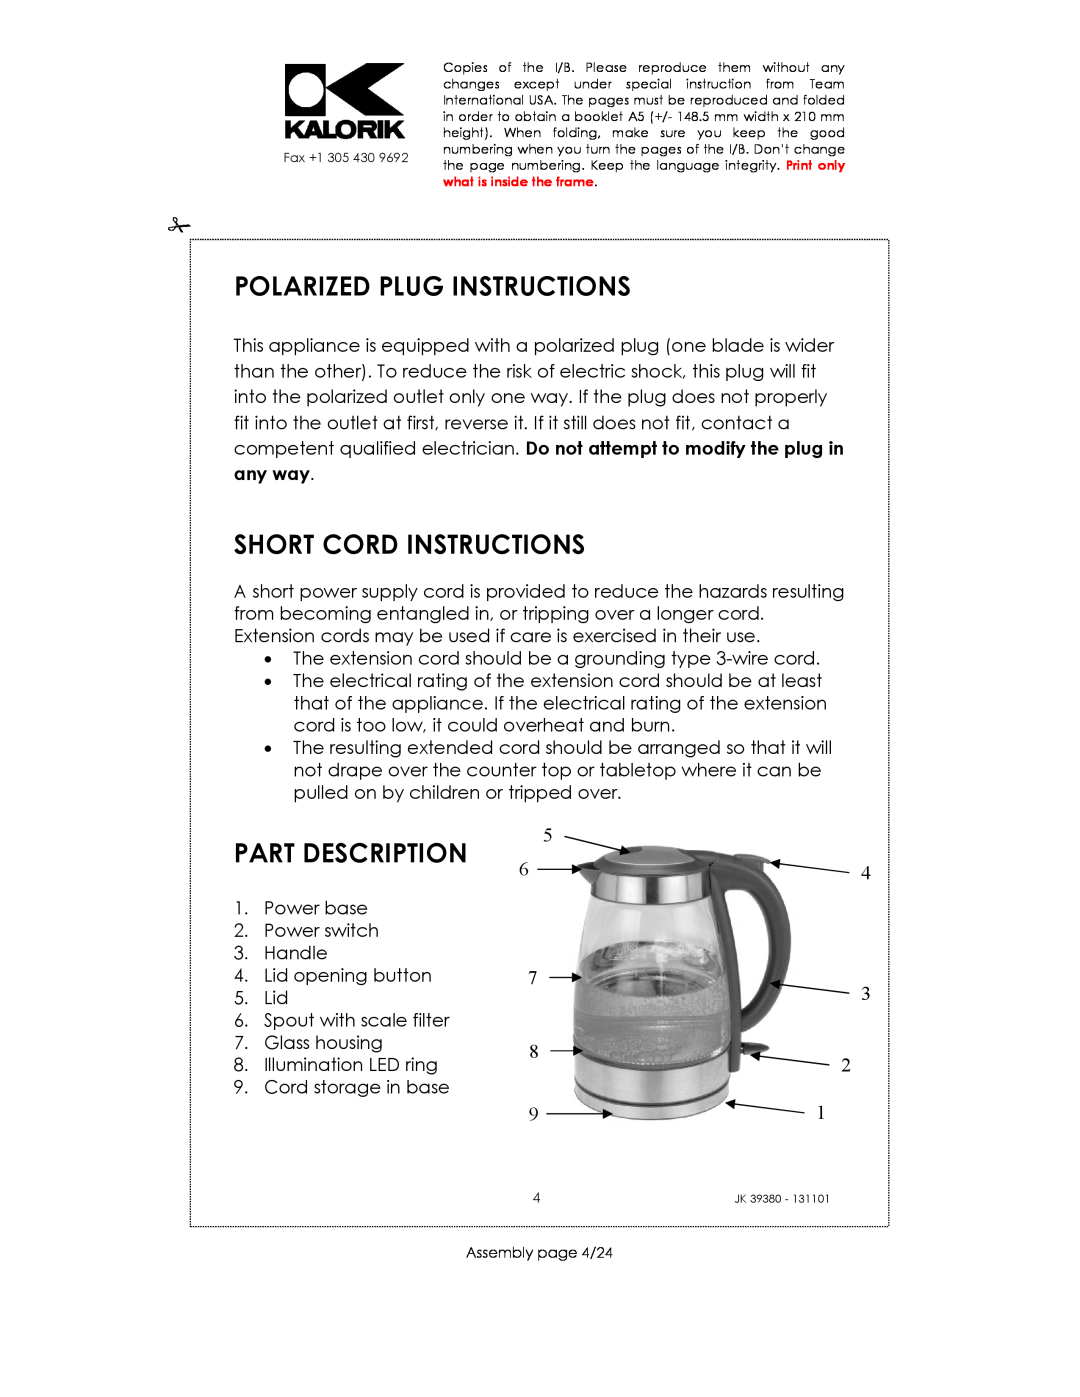 Kalorik JK 39380 manual Polarized Plug Instructions, Short Cord Instructions, any way, Part Description 